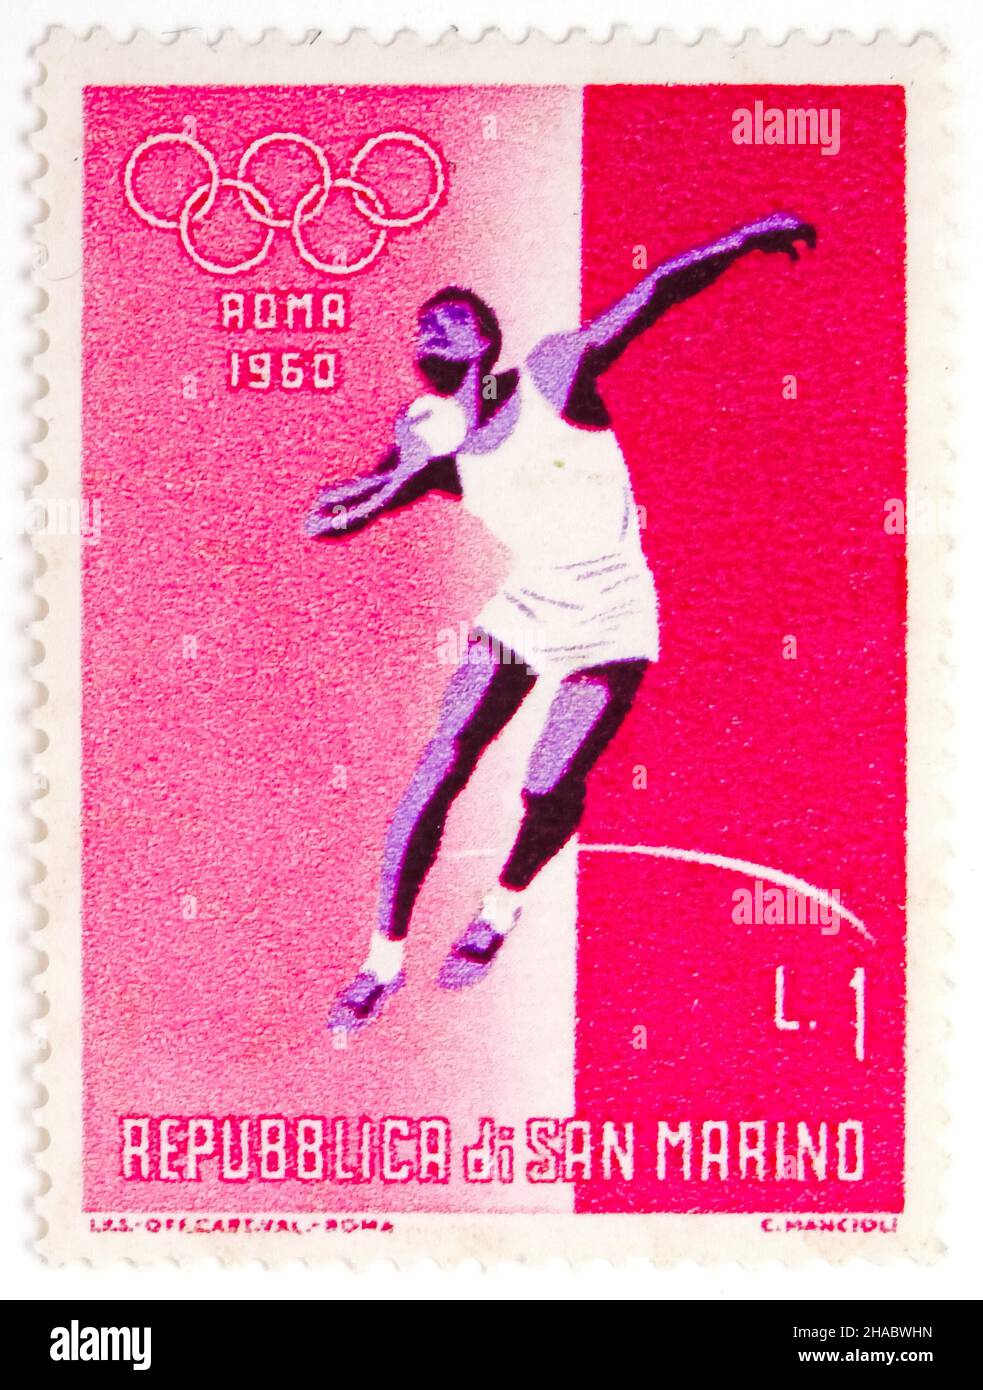 MOSCÚ, RUSIA - 15 DE JULIO de 2019: Sello postal impreso en San Marino Shot-Put, Juegos Olímpicos de Verano 1960 - Serie de Roma, alrededor de 1960 Foto de stock